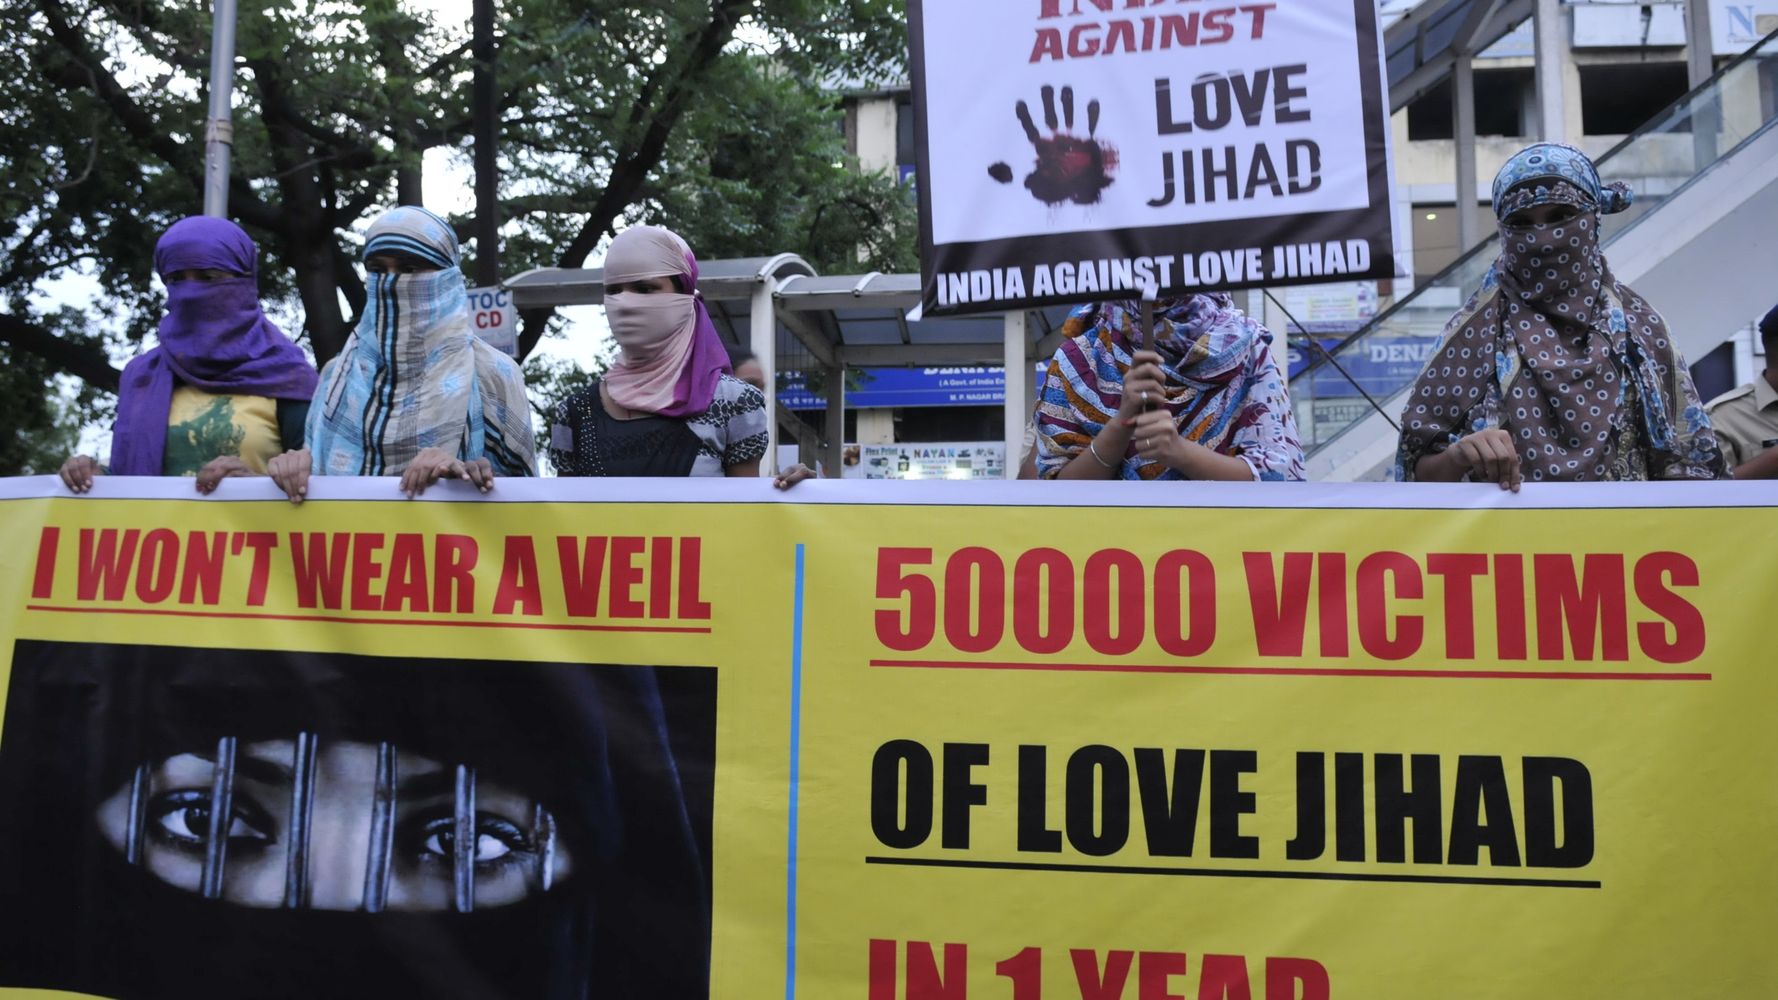 Against love. Love Jihad. India Love Jihad.